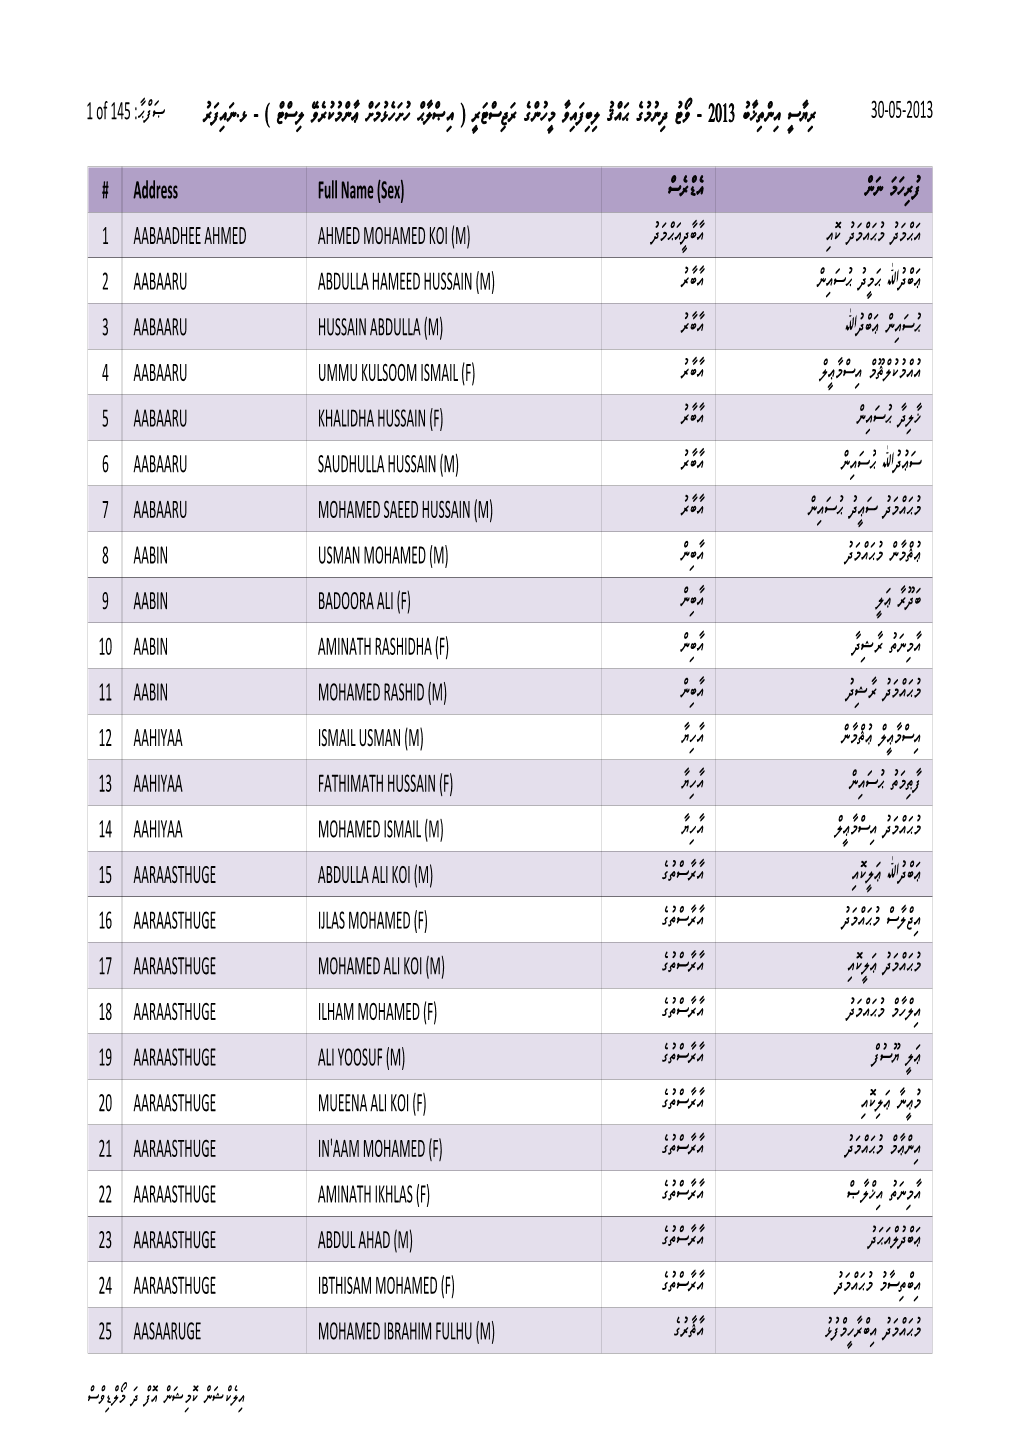 LH NAIFARU Voters Reg 2013 Presidential Election.Xlsx